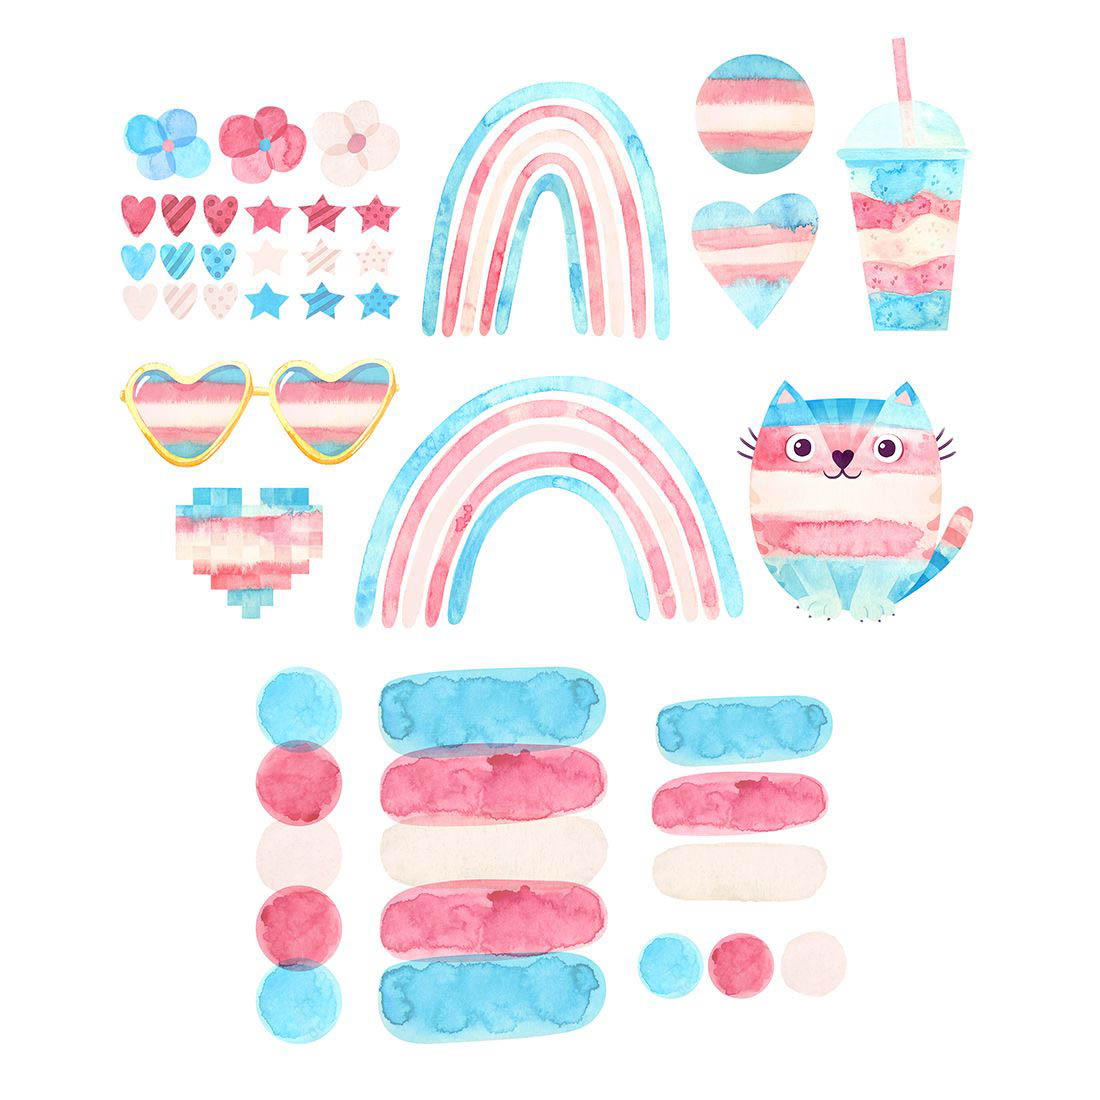 Transgender pride watercolor clipart & seamless patterns. LGBTQIA pride month, Trans rainbow flags.